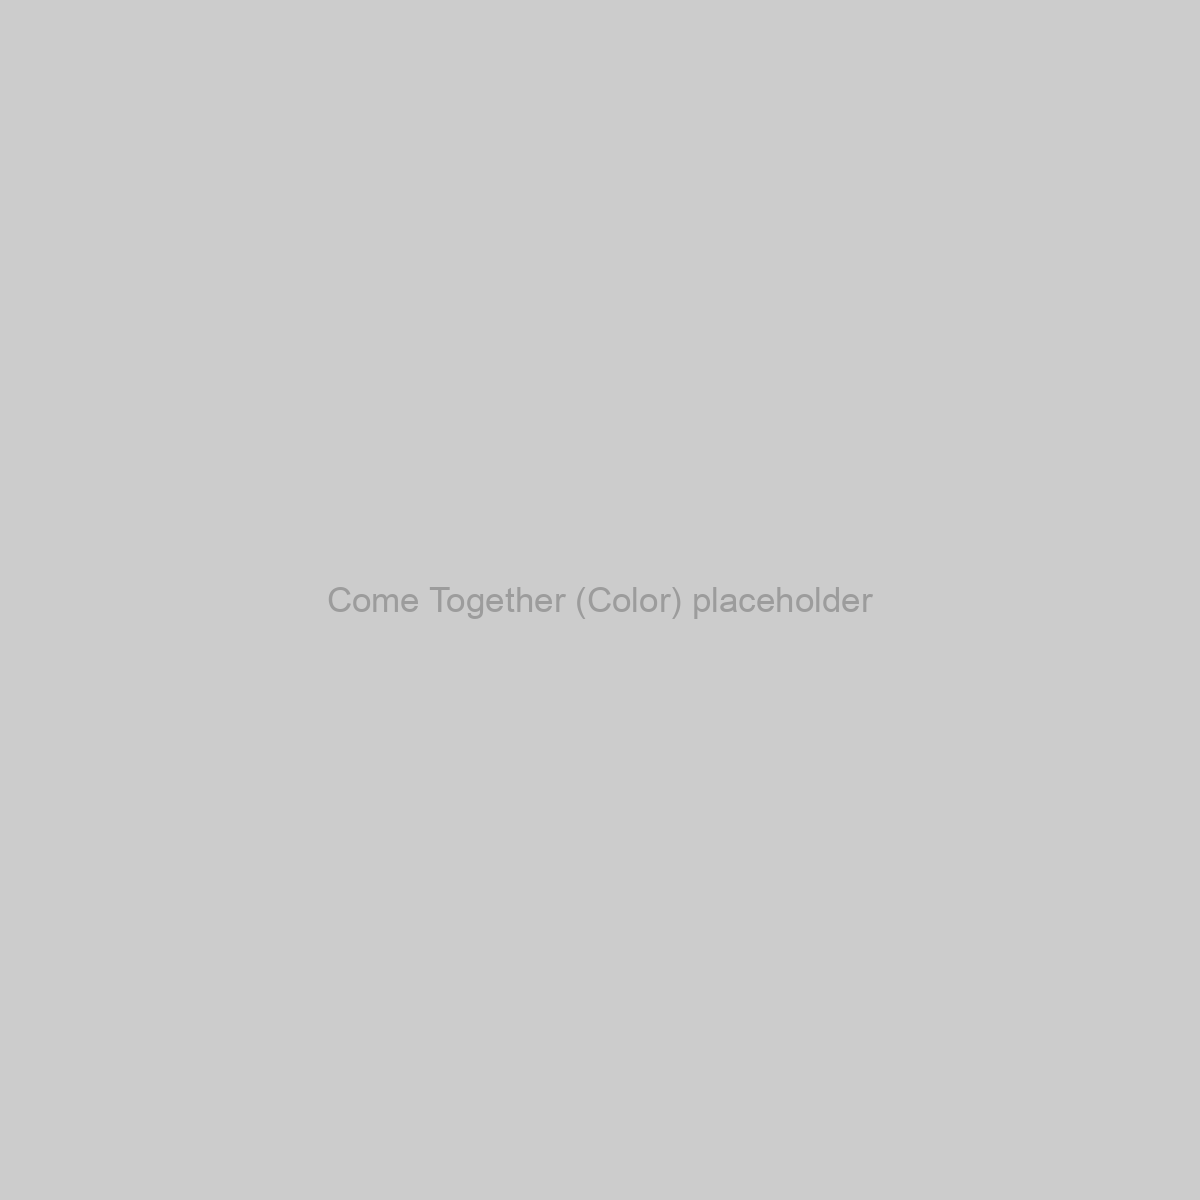 Come Together (Color) Placeholder Image